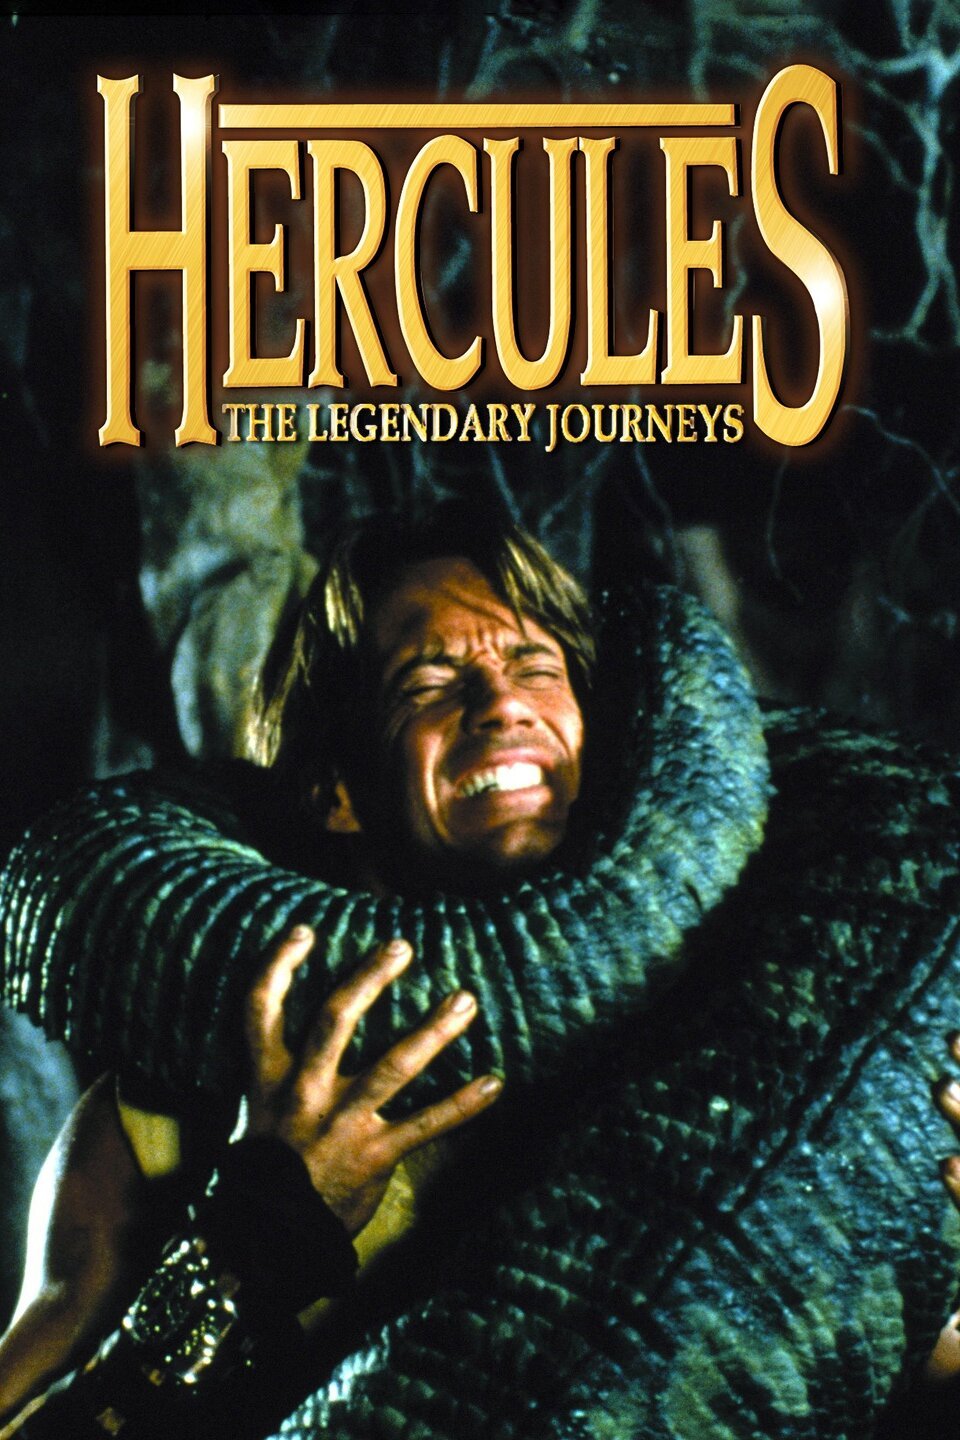 hercules the legendary journeys intro lyrics